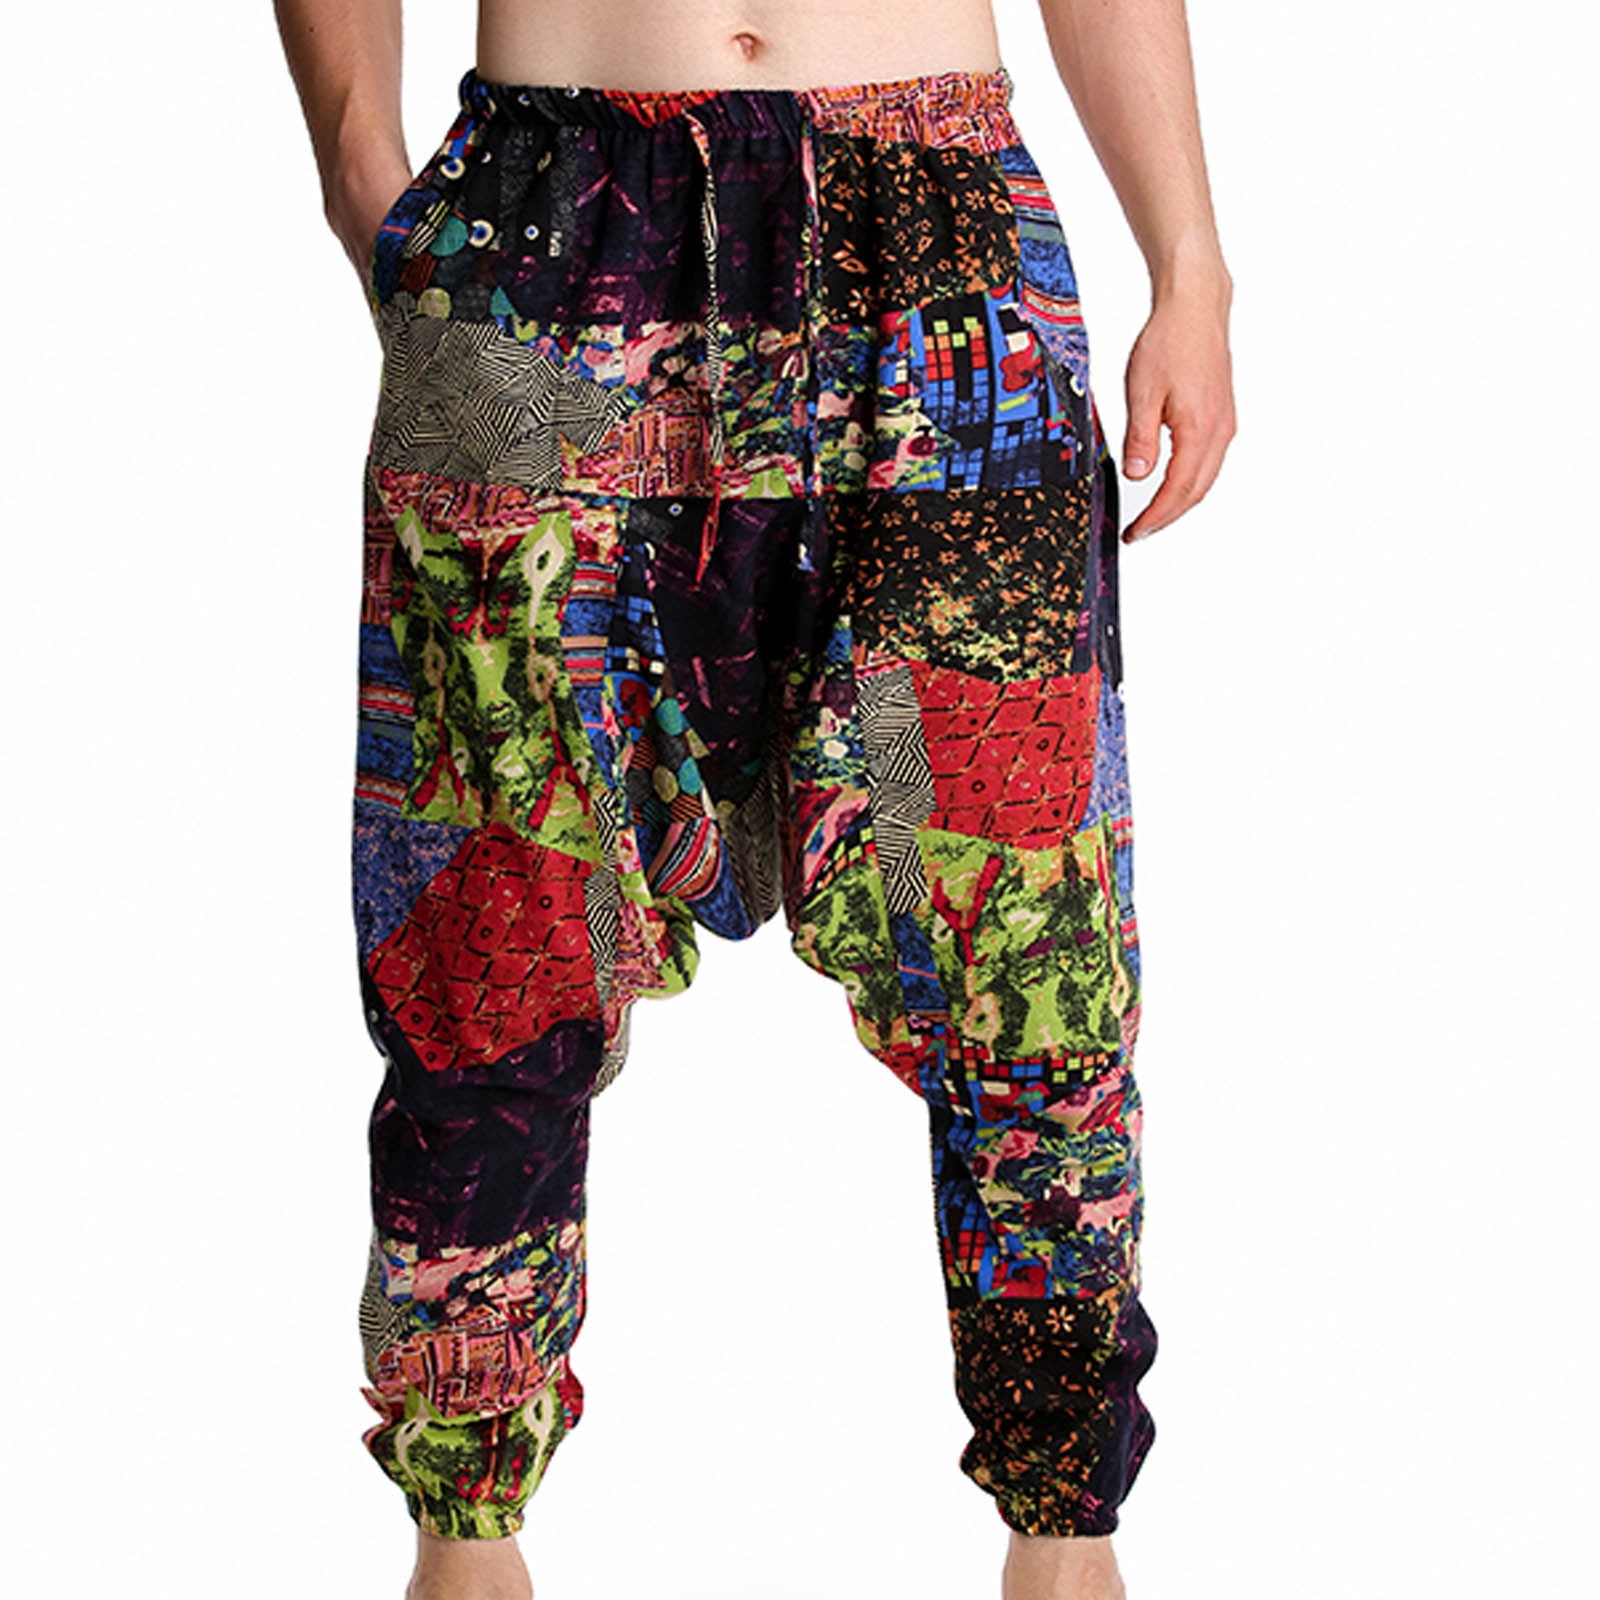 Mardi Gras Boho Style Printed Pants